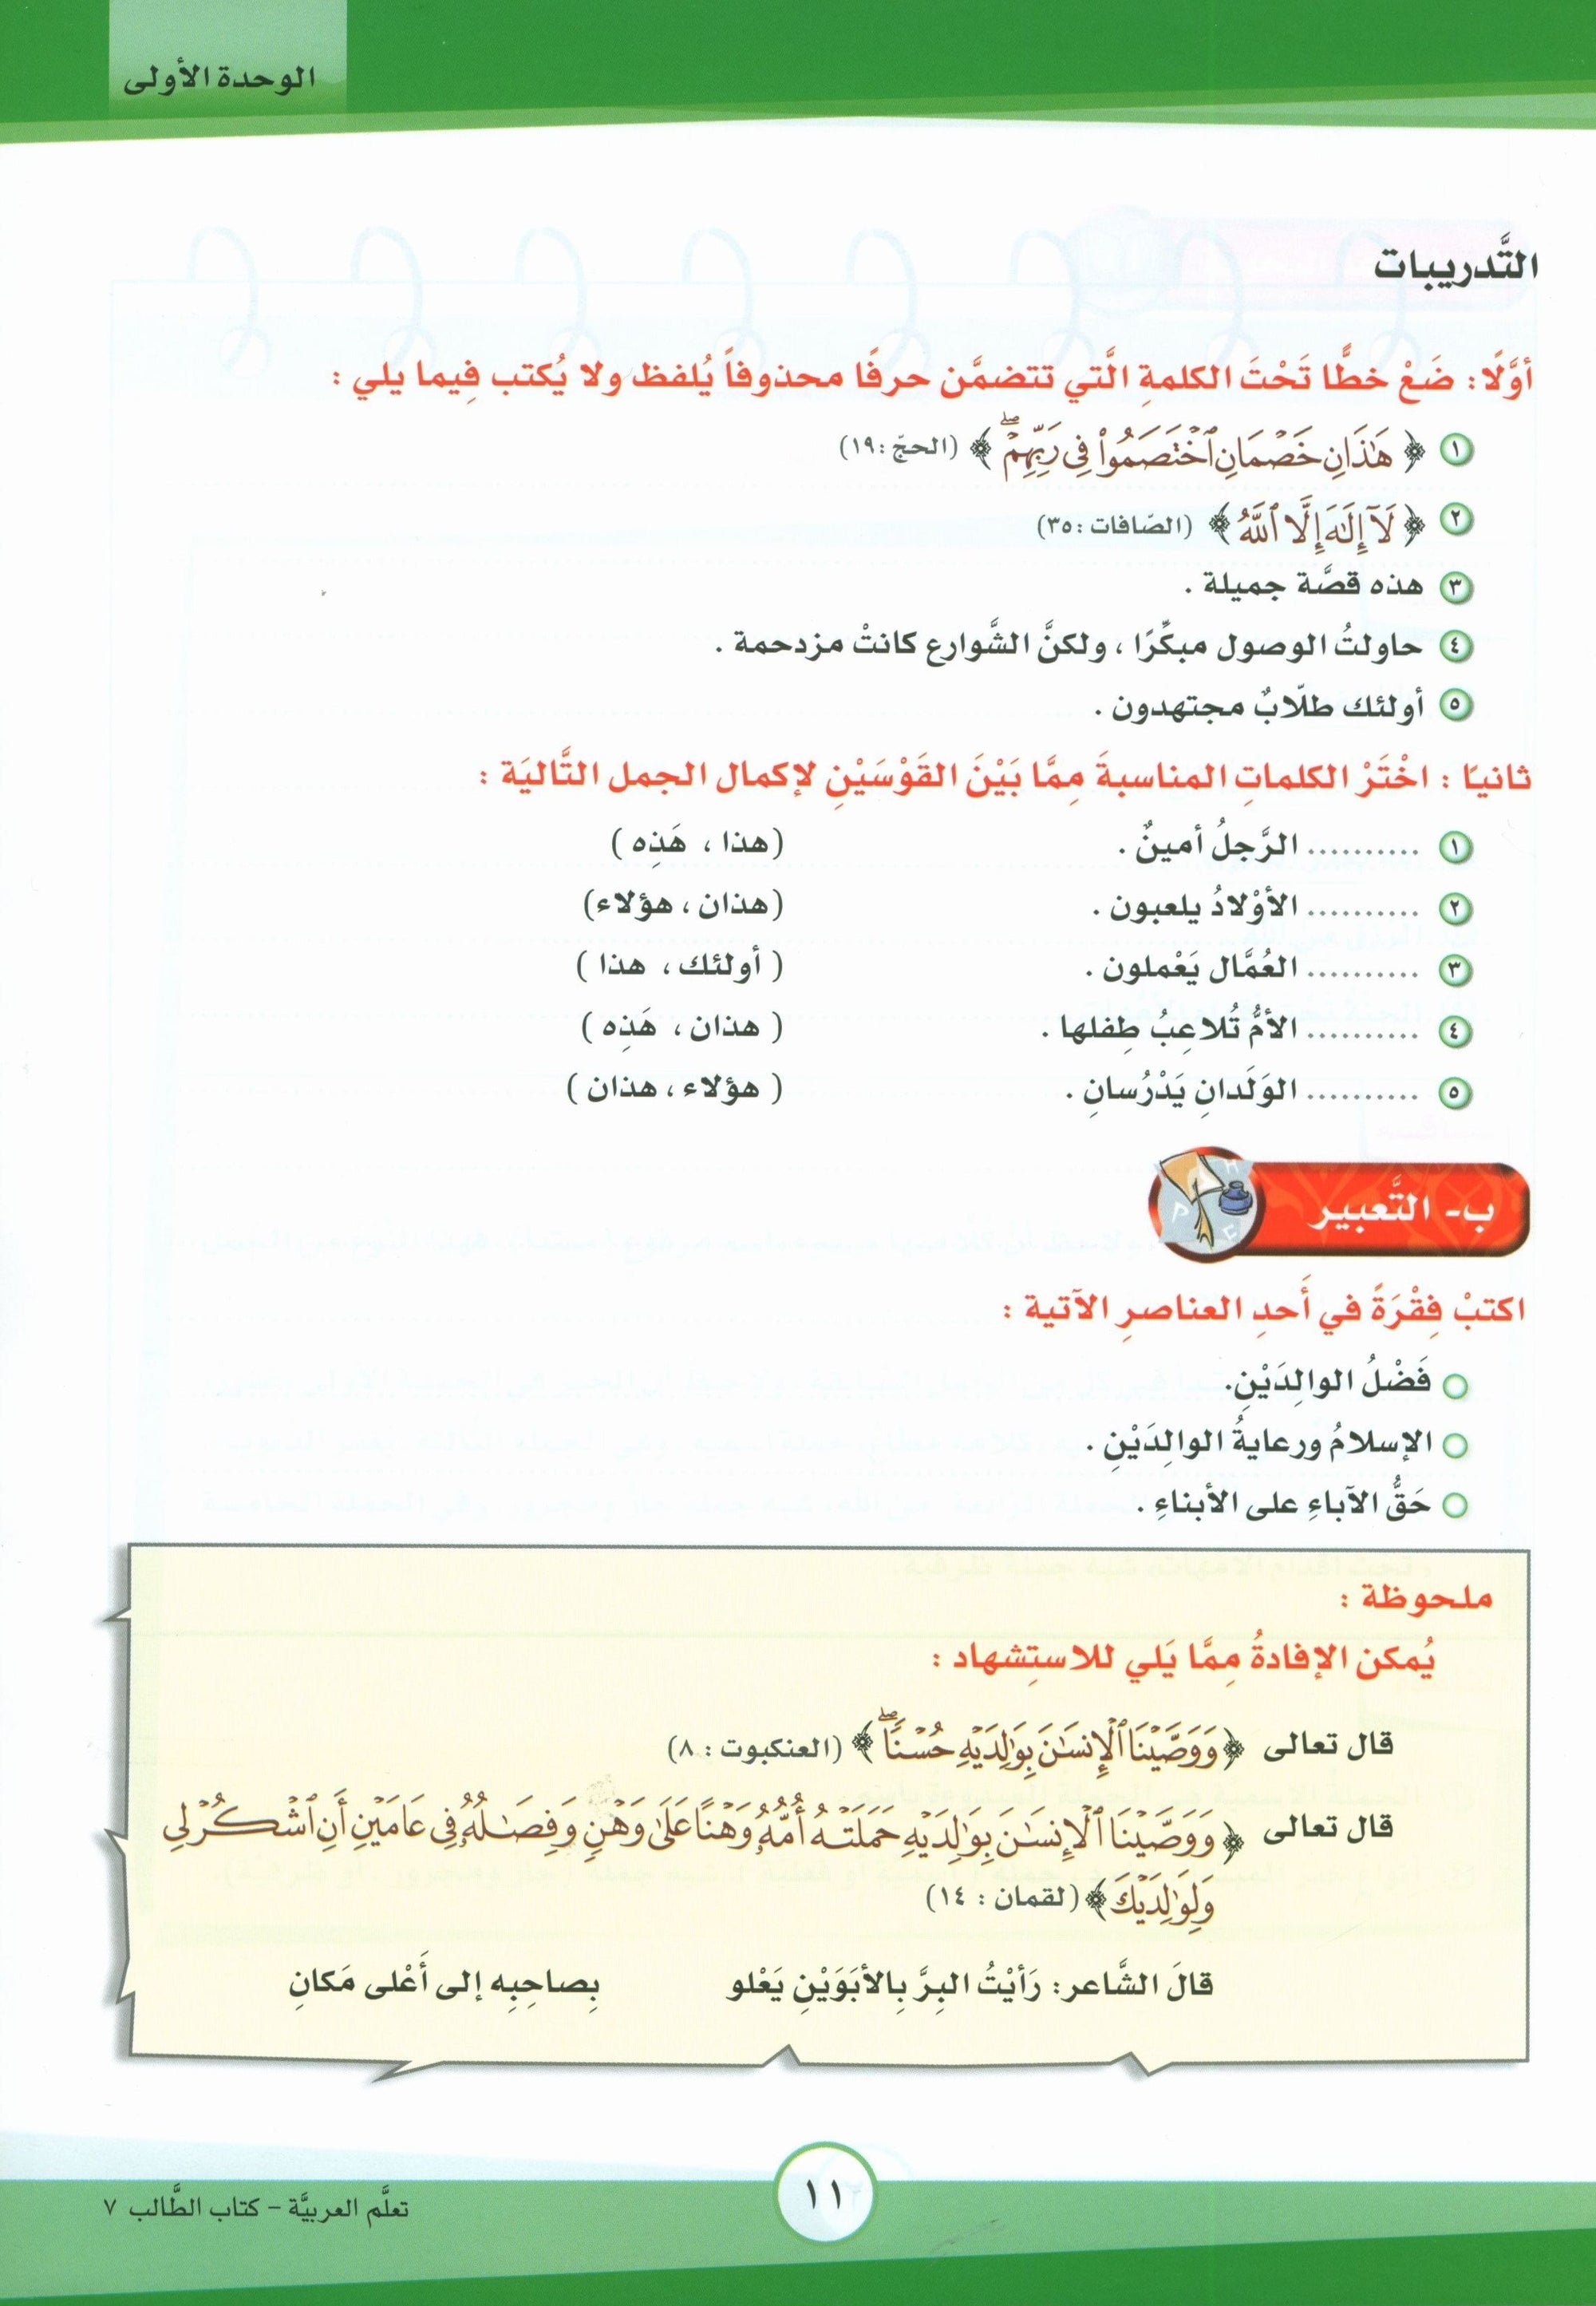 ICO Learn Arabic Workbook Level 7 Part 1 تعلم العربية كتاب التدريبات